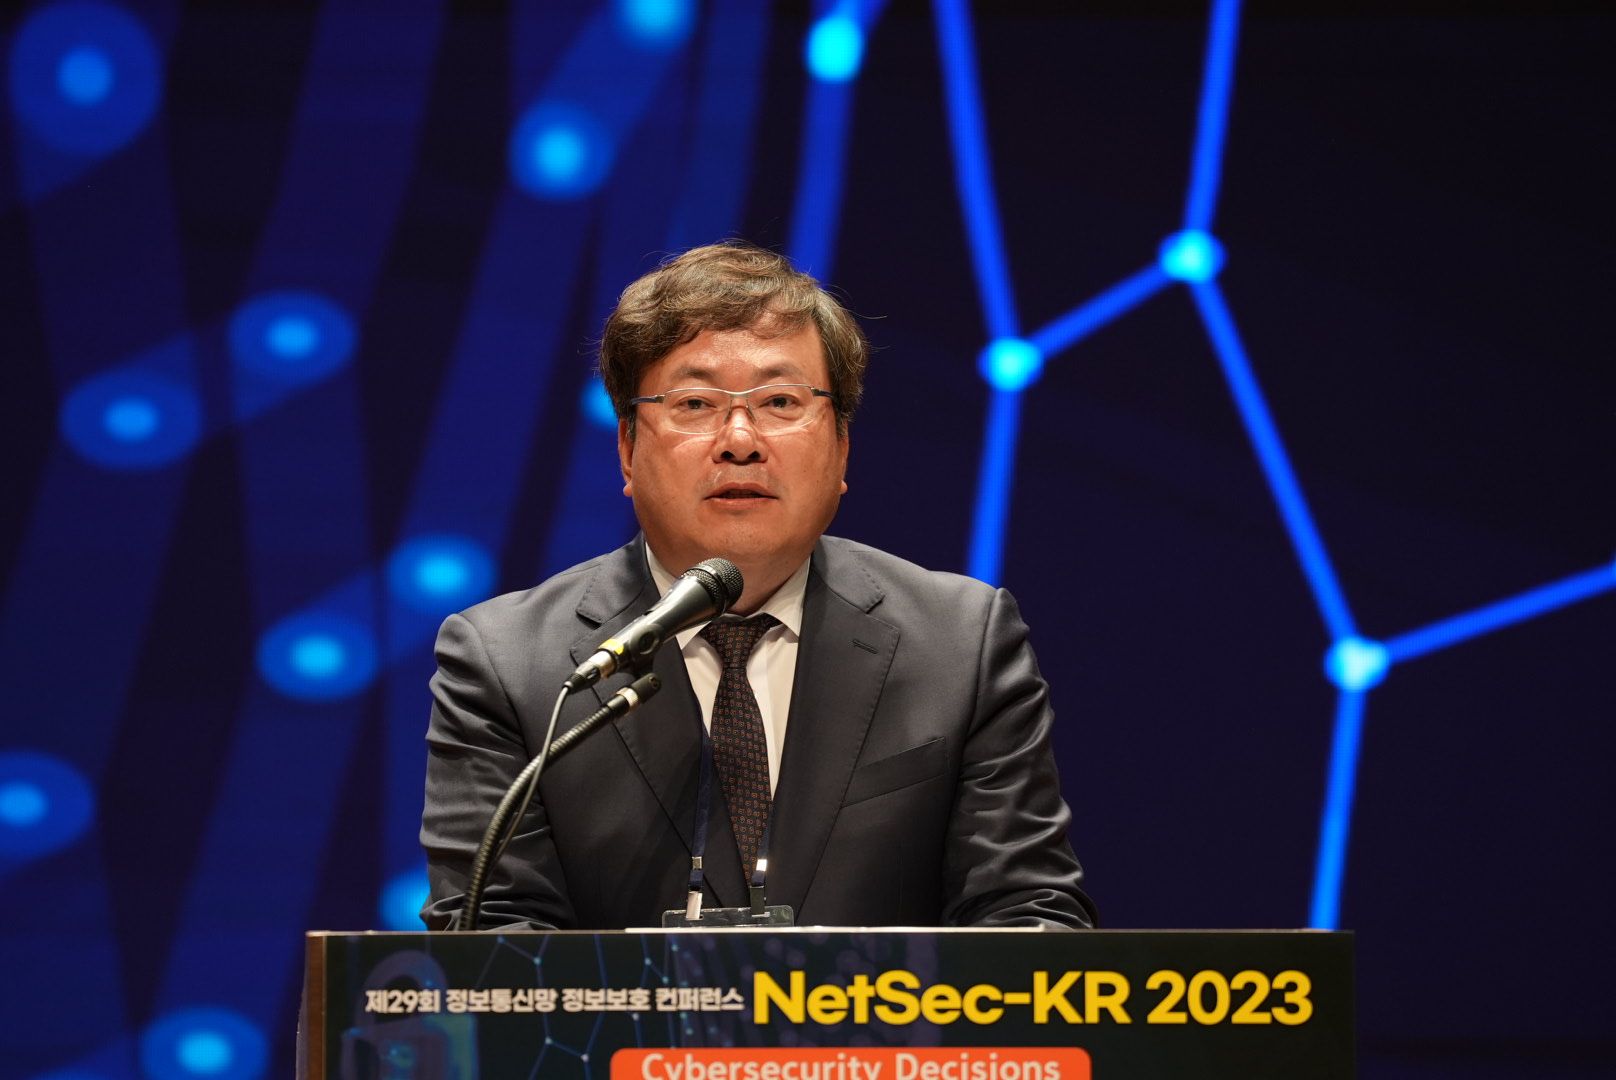 NetSec KR - Top Korean cybersecurity academic reveals details on WISA